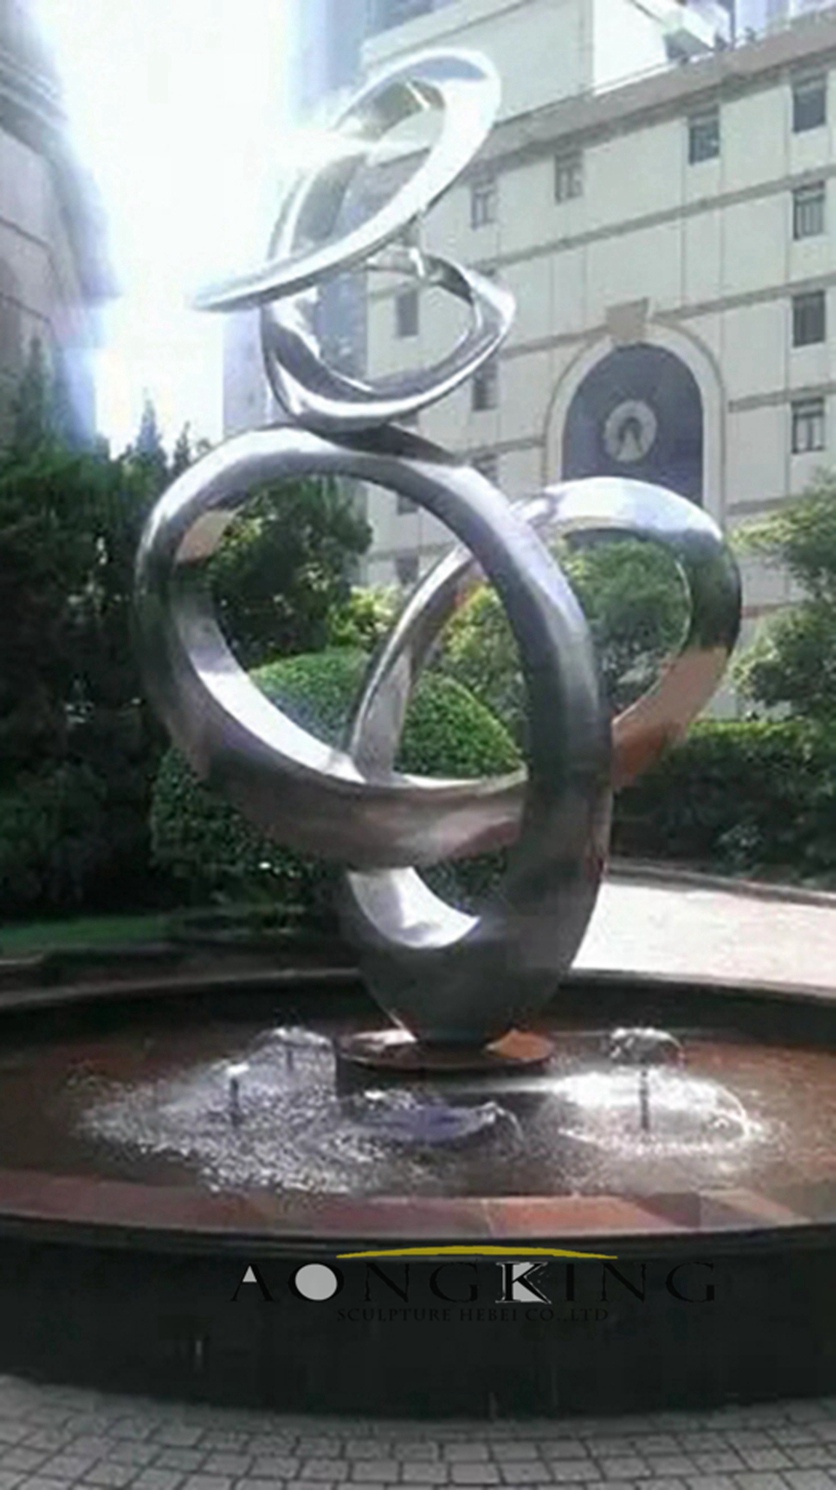 Mirrored water sculptures Super Simple stainless steel Sculpture 1